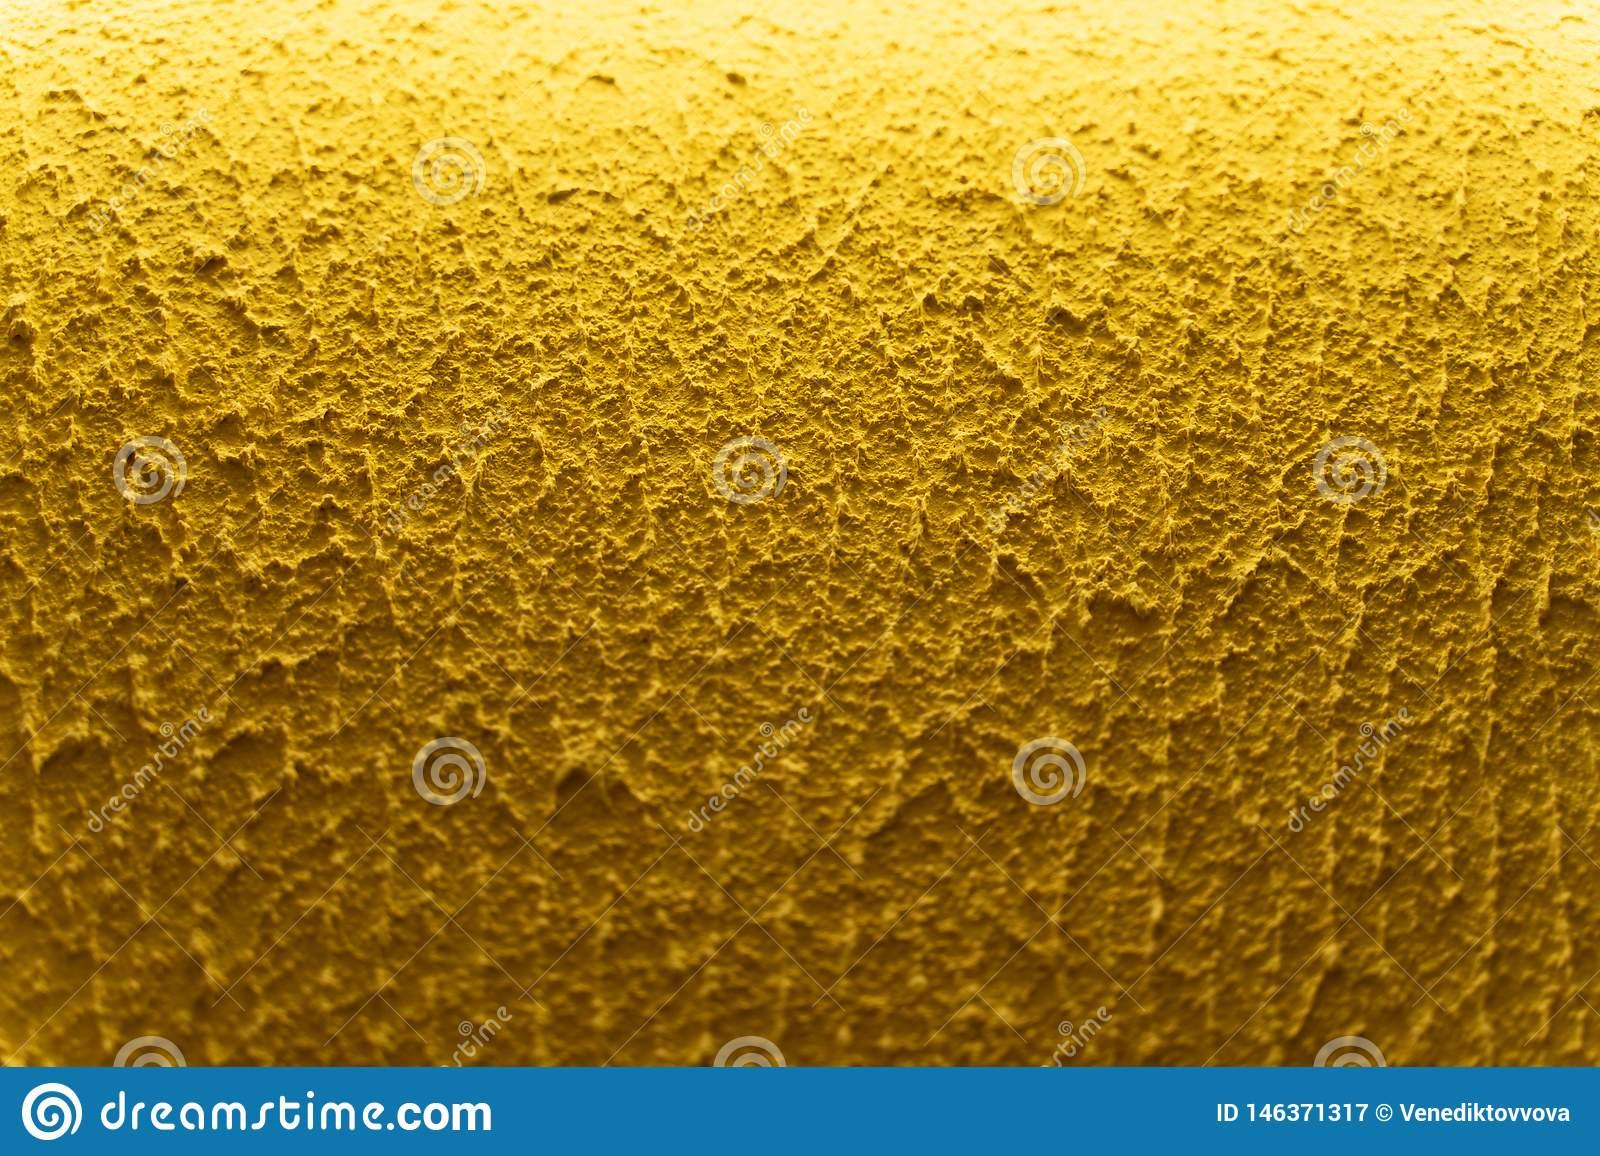 1600 x 1156 · jpeg - Background Texture Yellow Textured Walls. Wallpaper Design Stock Image ...